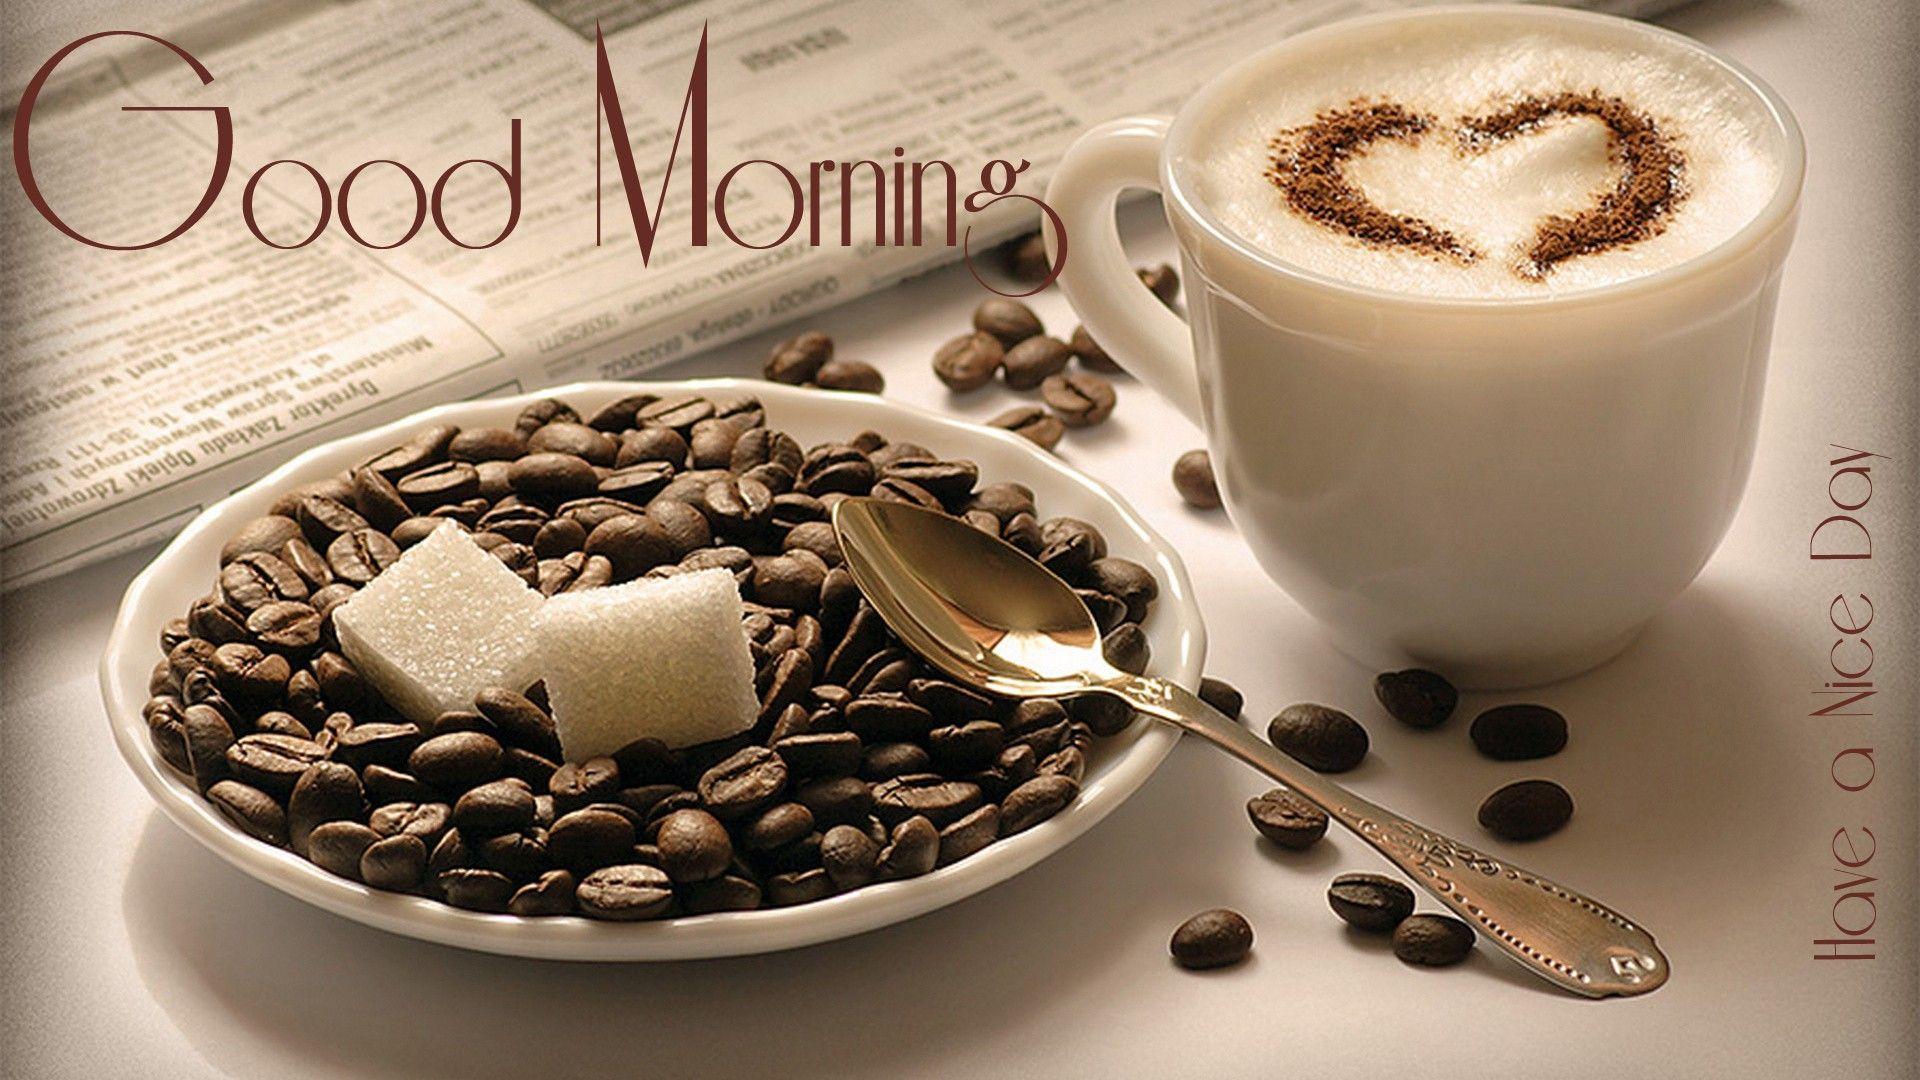 good morning coffee mug image. Good morning good morning cup